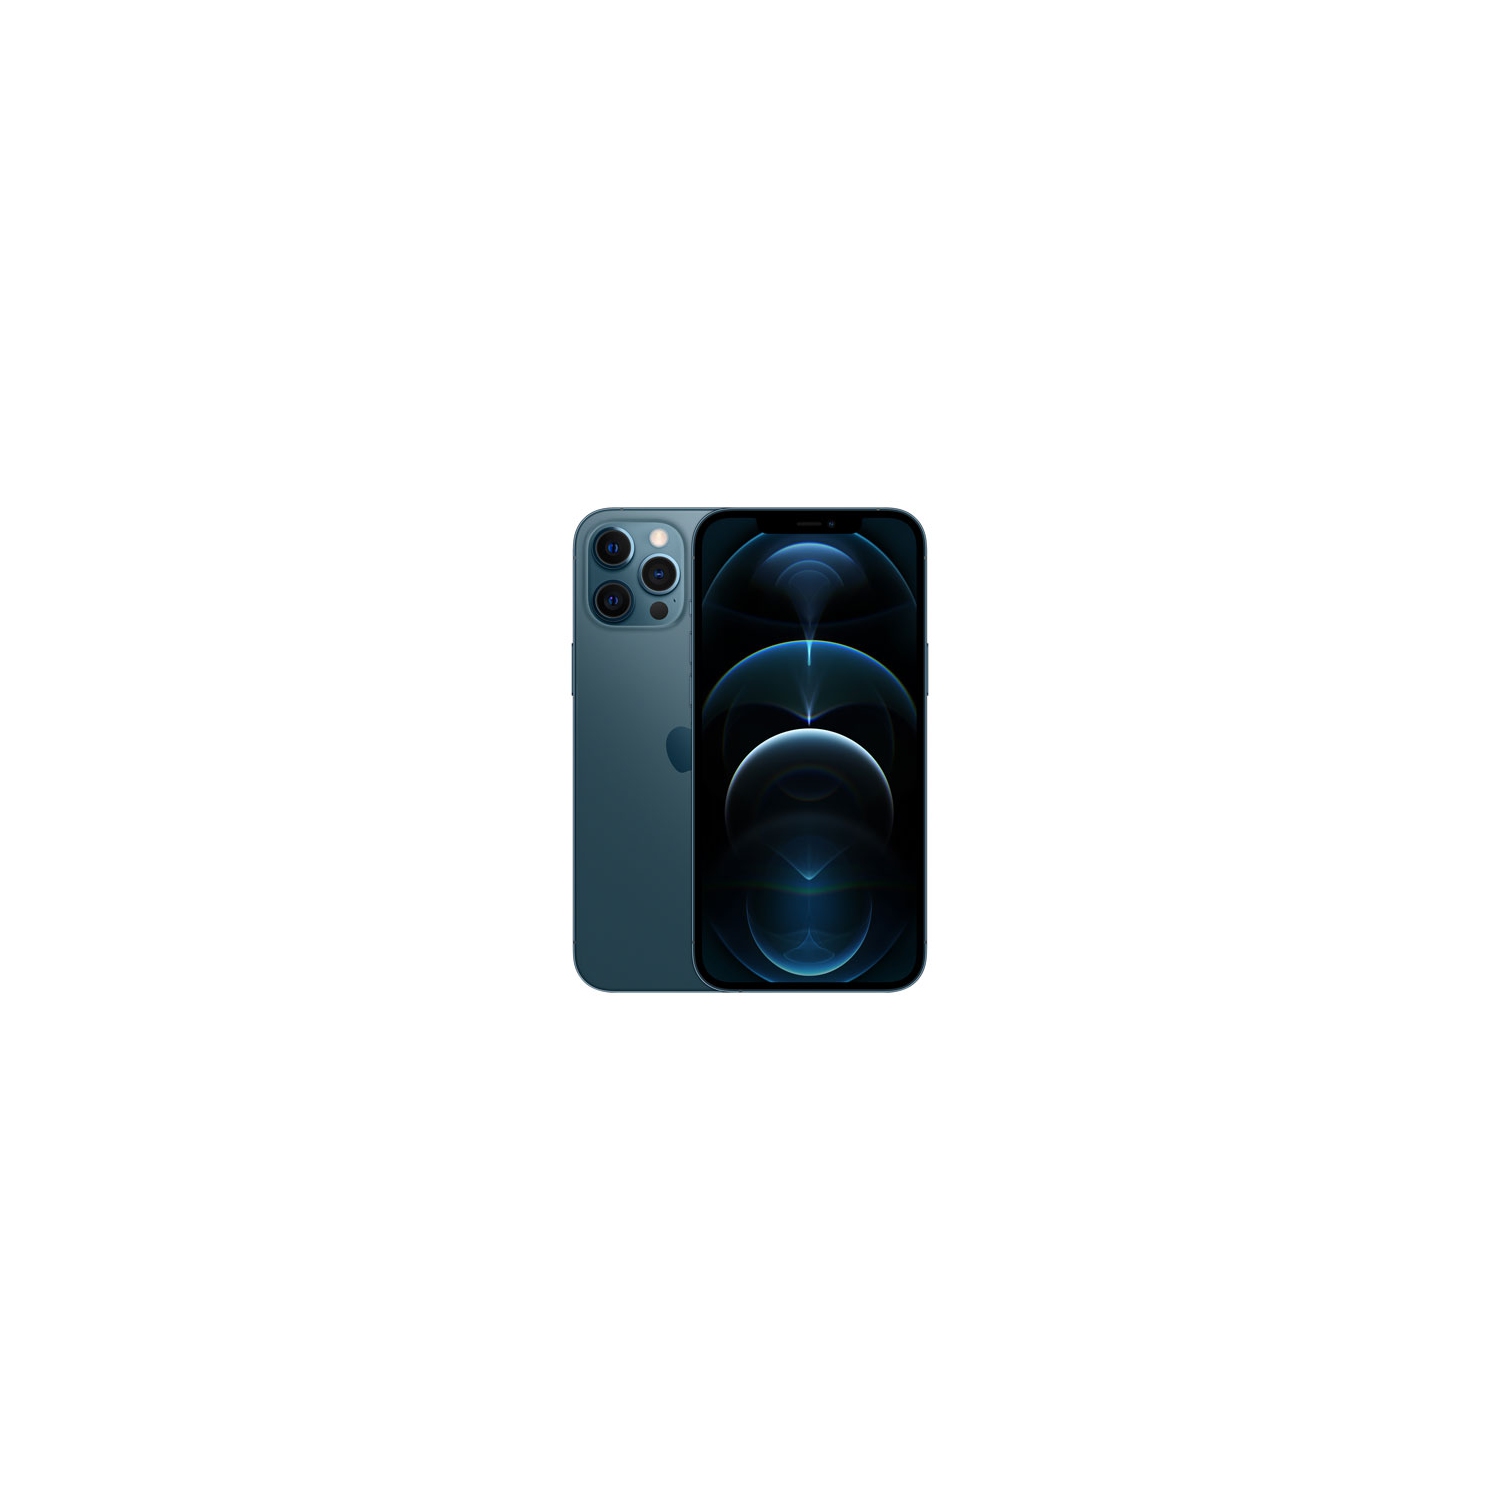 Refurbished (Fair) - Apple iPhone 12 Pro Max 256GB - Pacific Blue - Unlocked